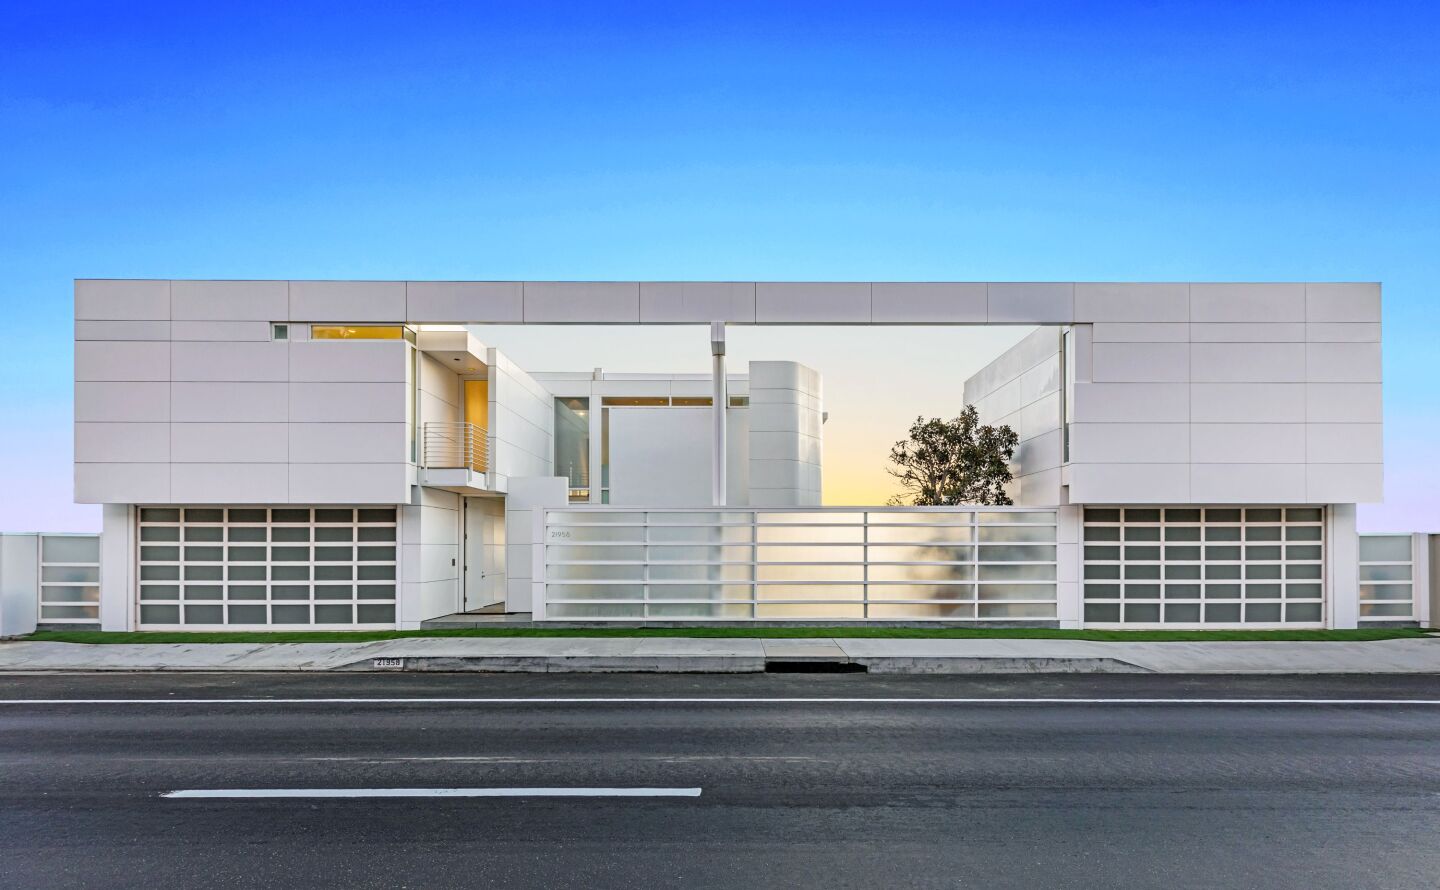 Eli Broad's Malibu compound - Los Angeles Times